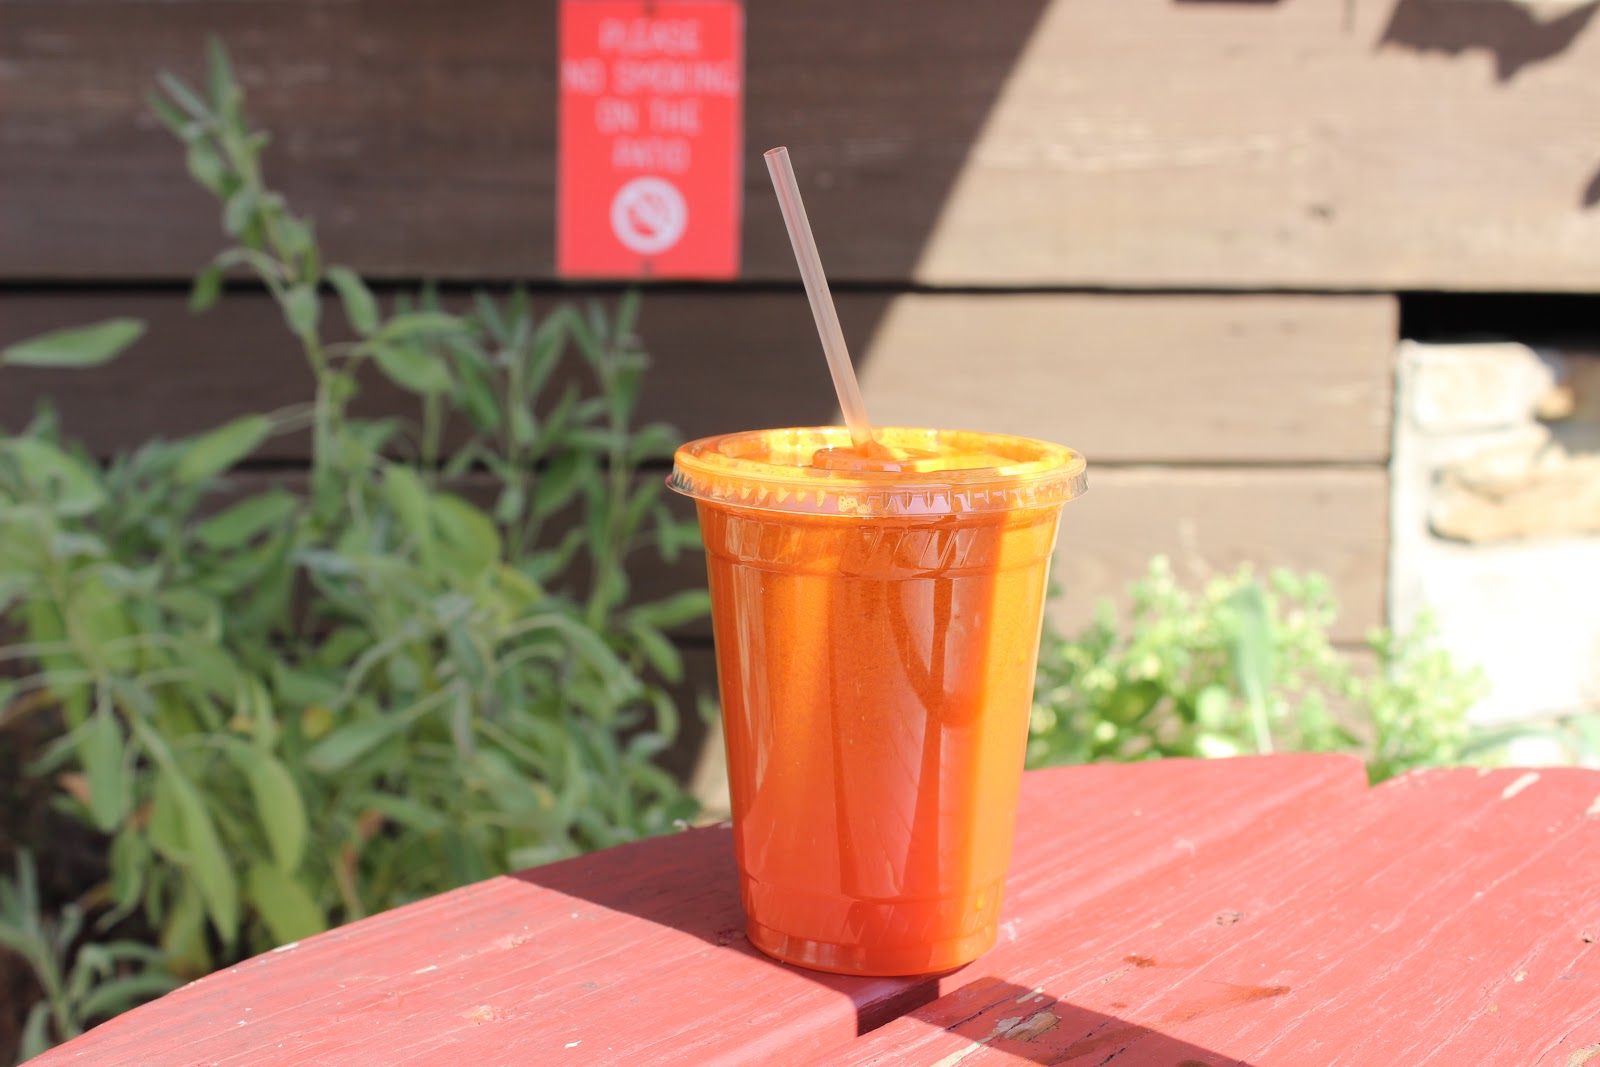 Orange juice outiside on table with sunshine